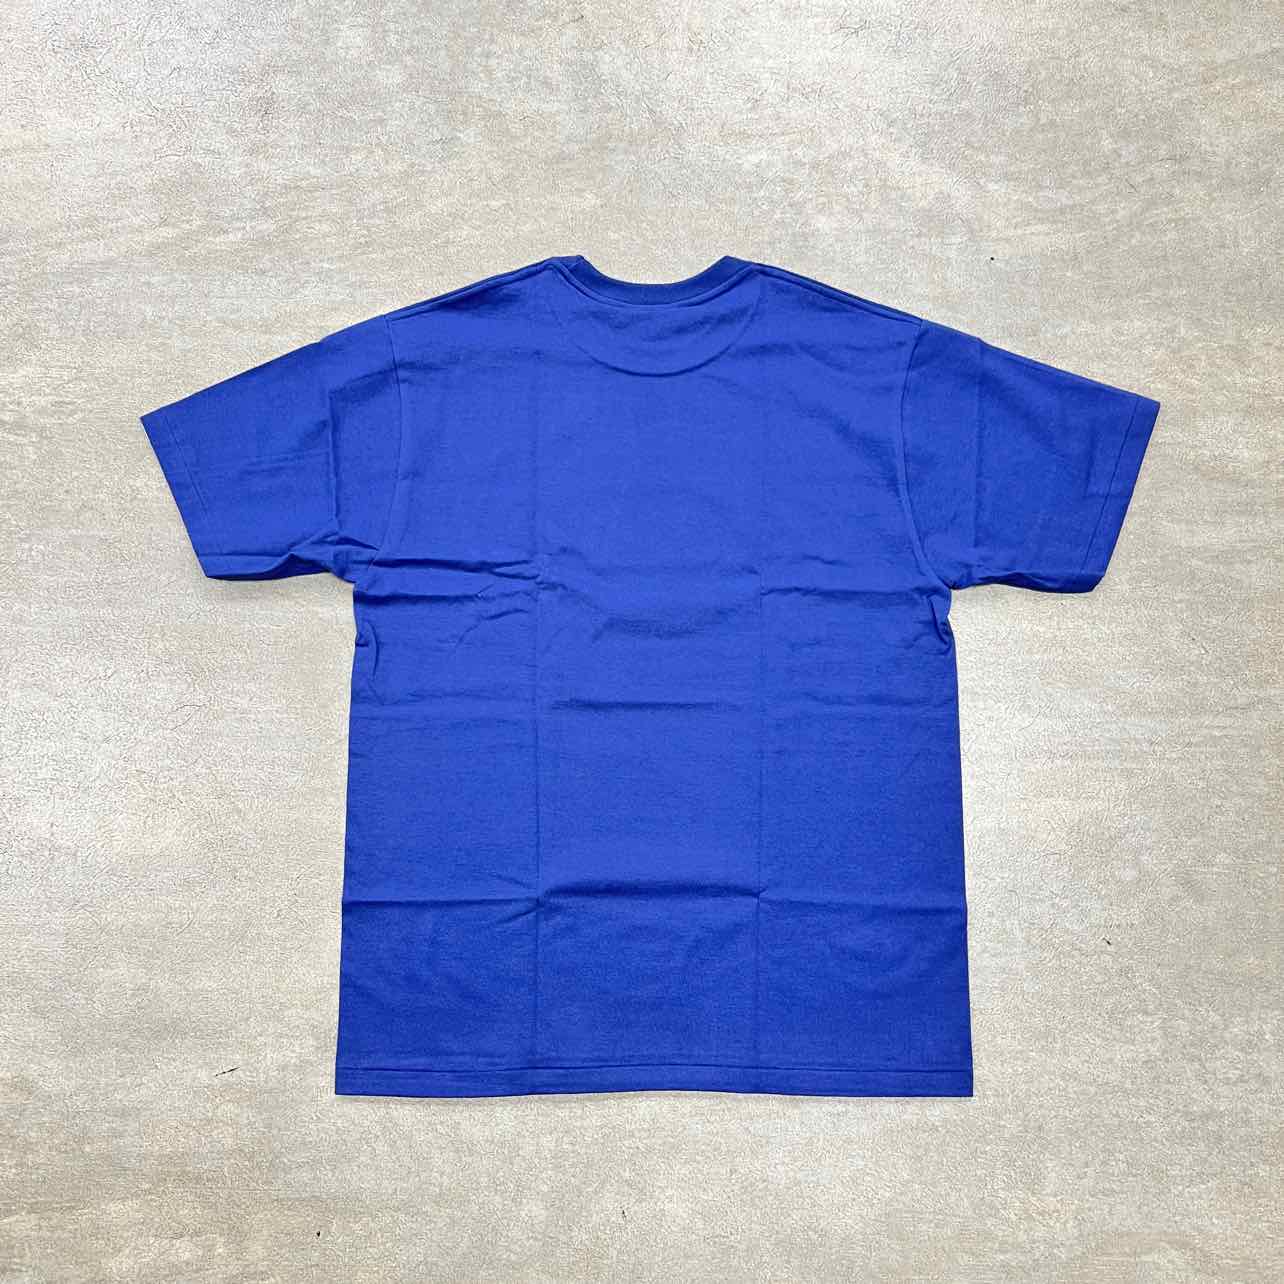 Bape T-Shirt "COLLEGE LOGO" Navy New Size L